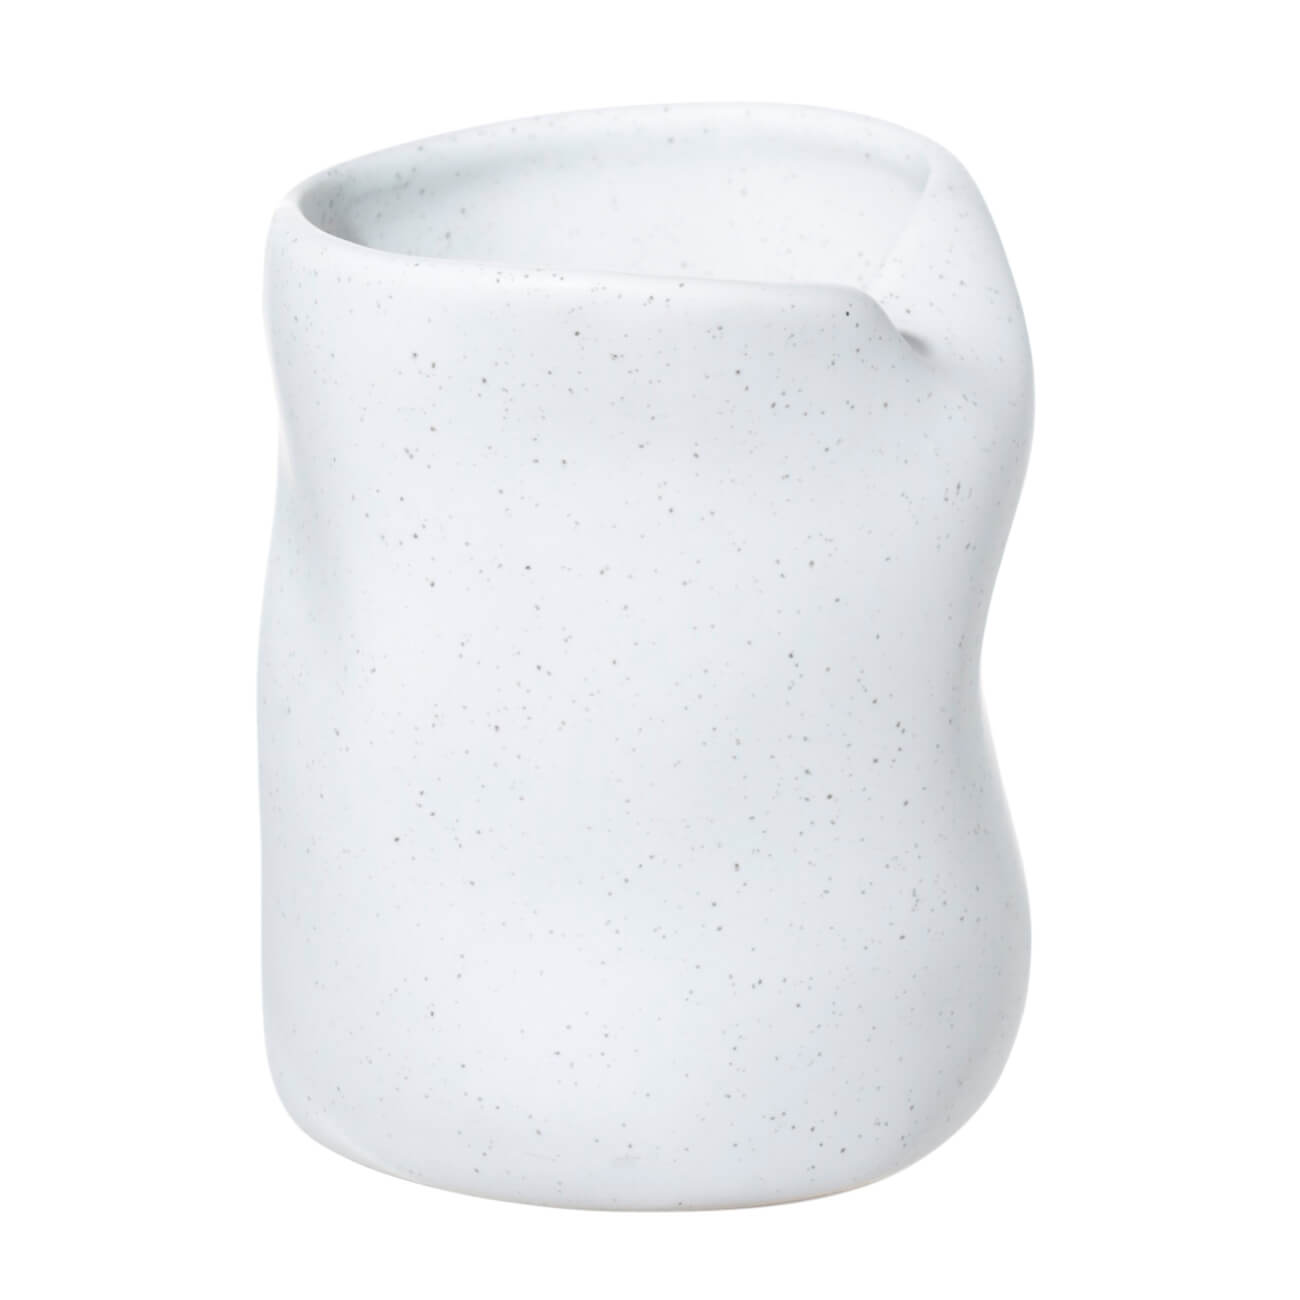 kuchenland стакан для ванной комнаты 13 см керамика белый shower lotus Стакан для ванной комнаты, 10 см, керамика, белый, в крапинку, Delicia